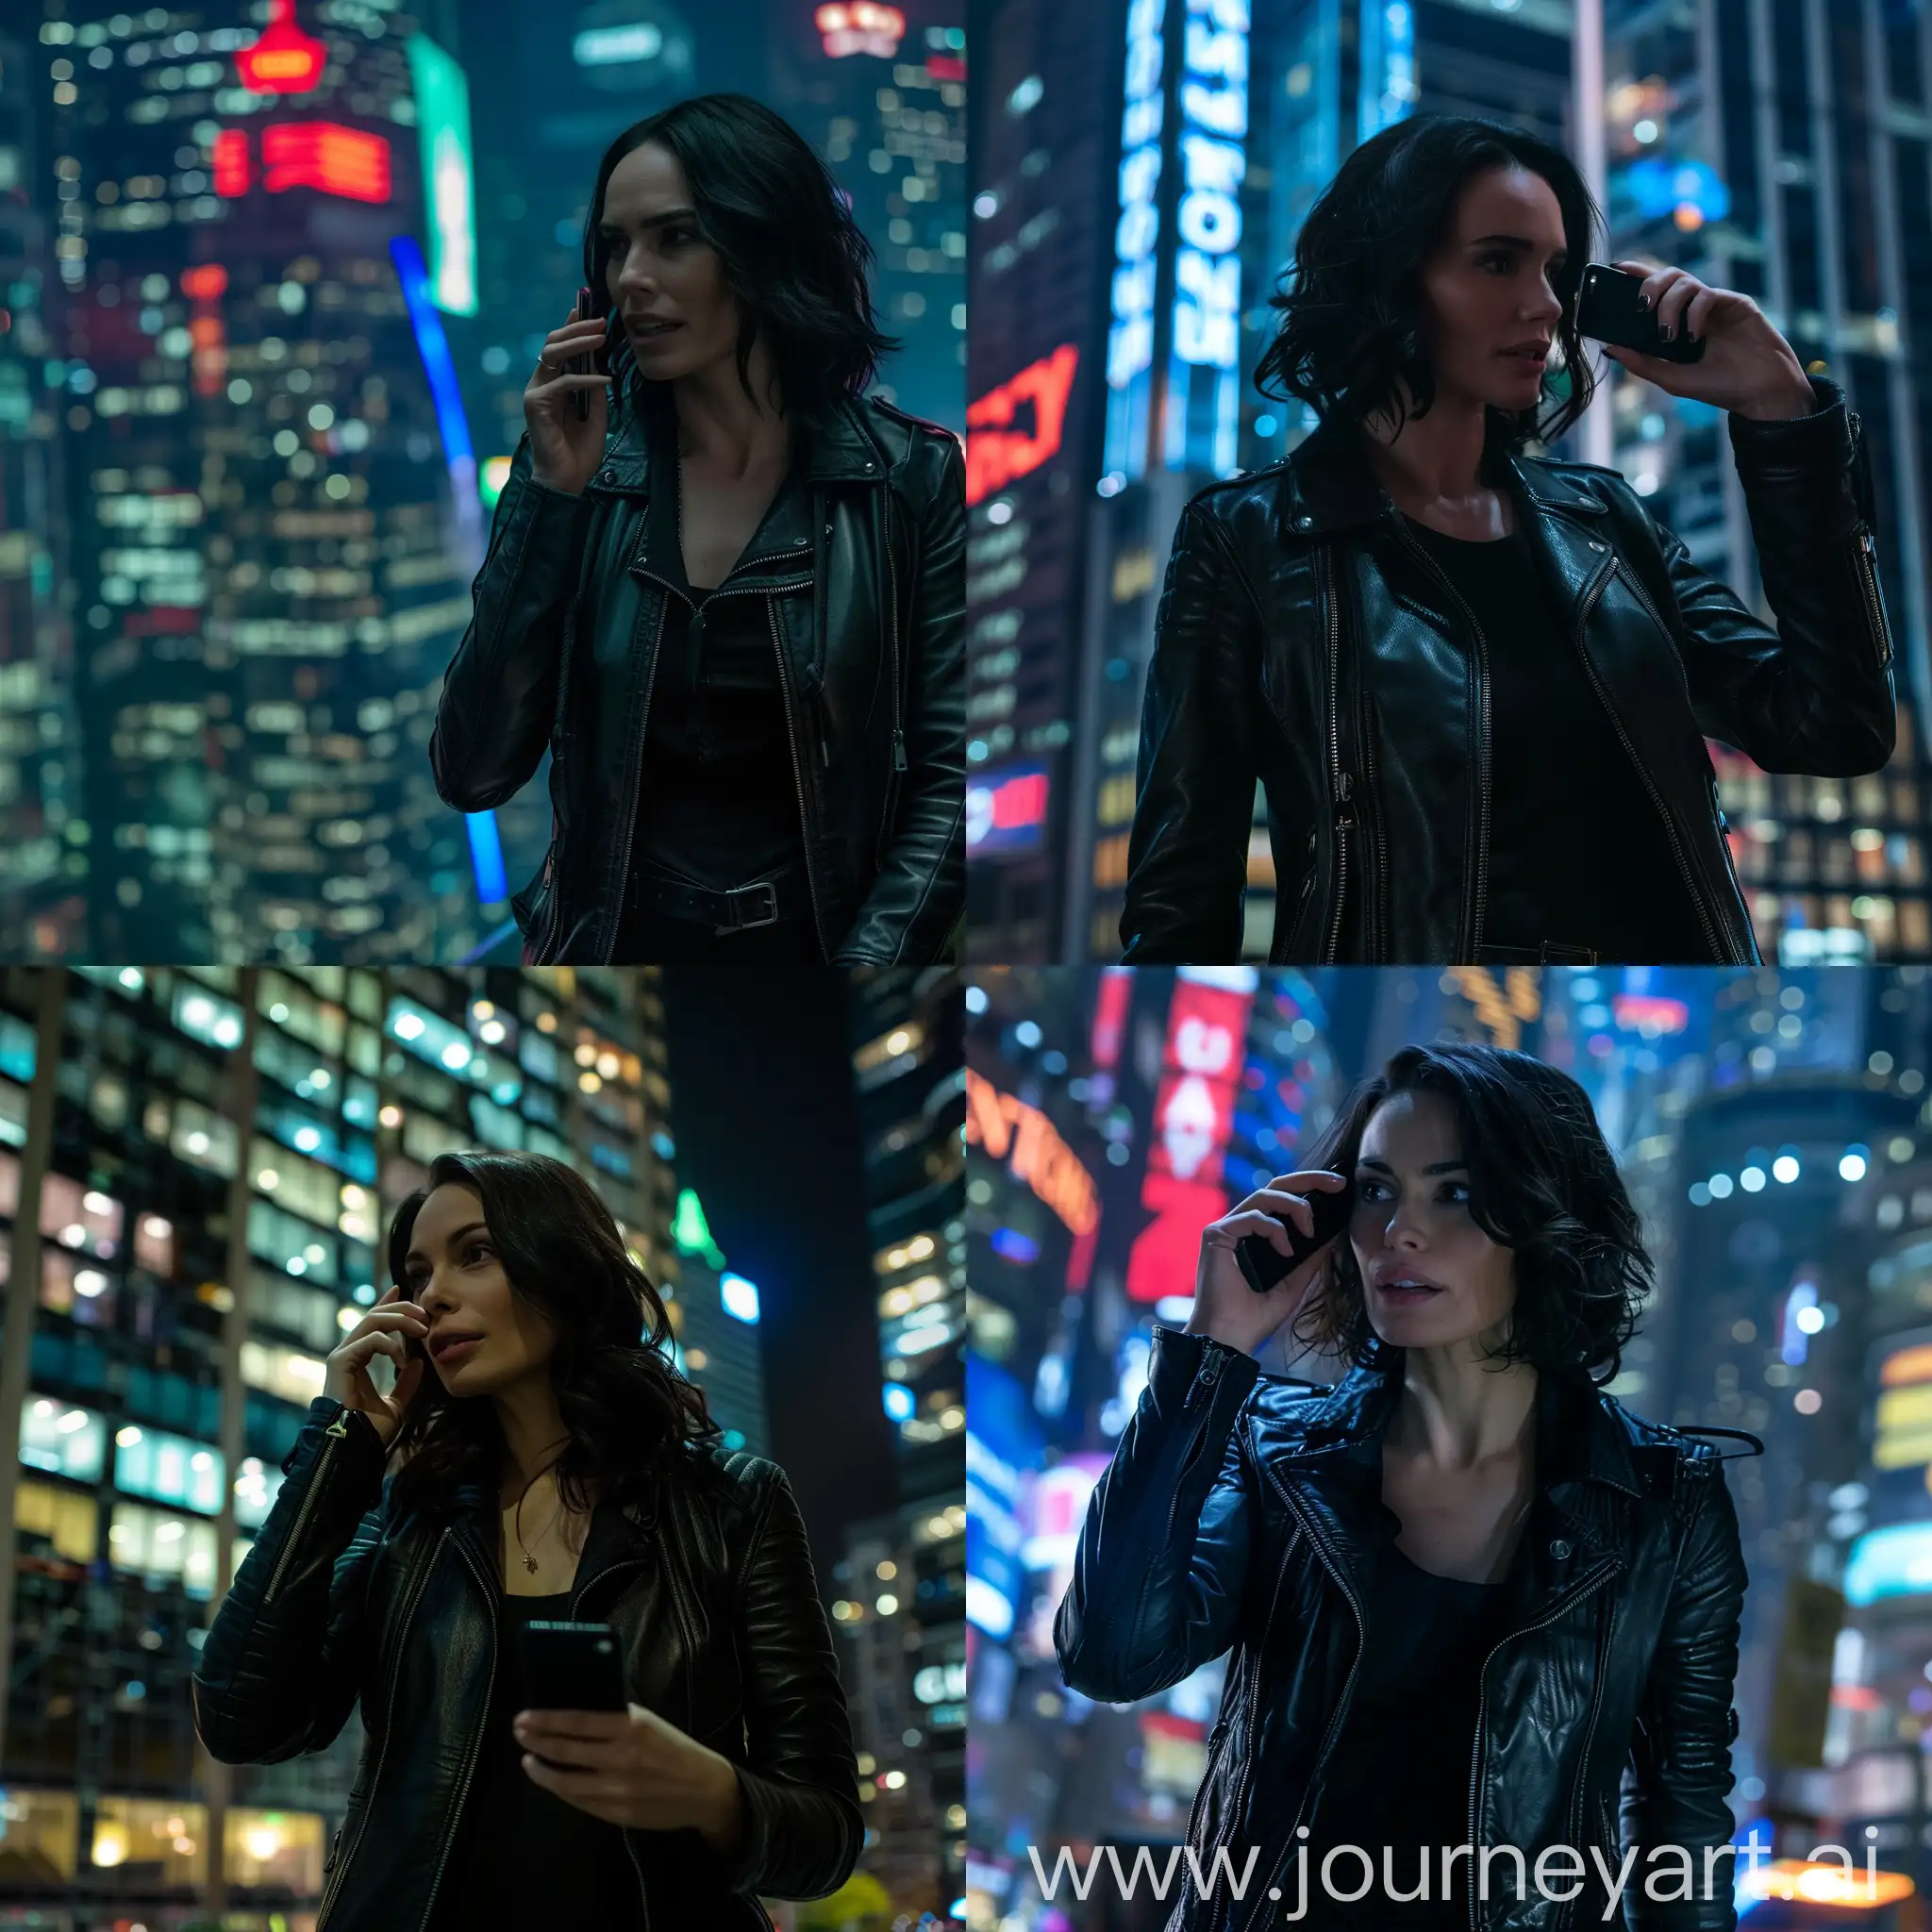 Brunette-Woman-in-Black-Leather-Jacket-Talking-on-Smartphone-in-Night-Metropolis